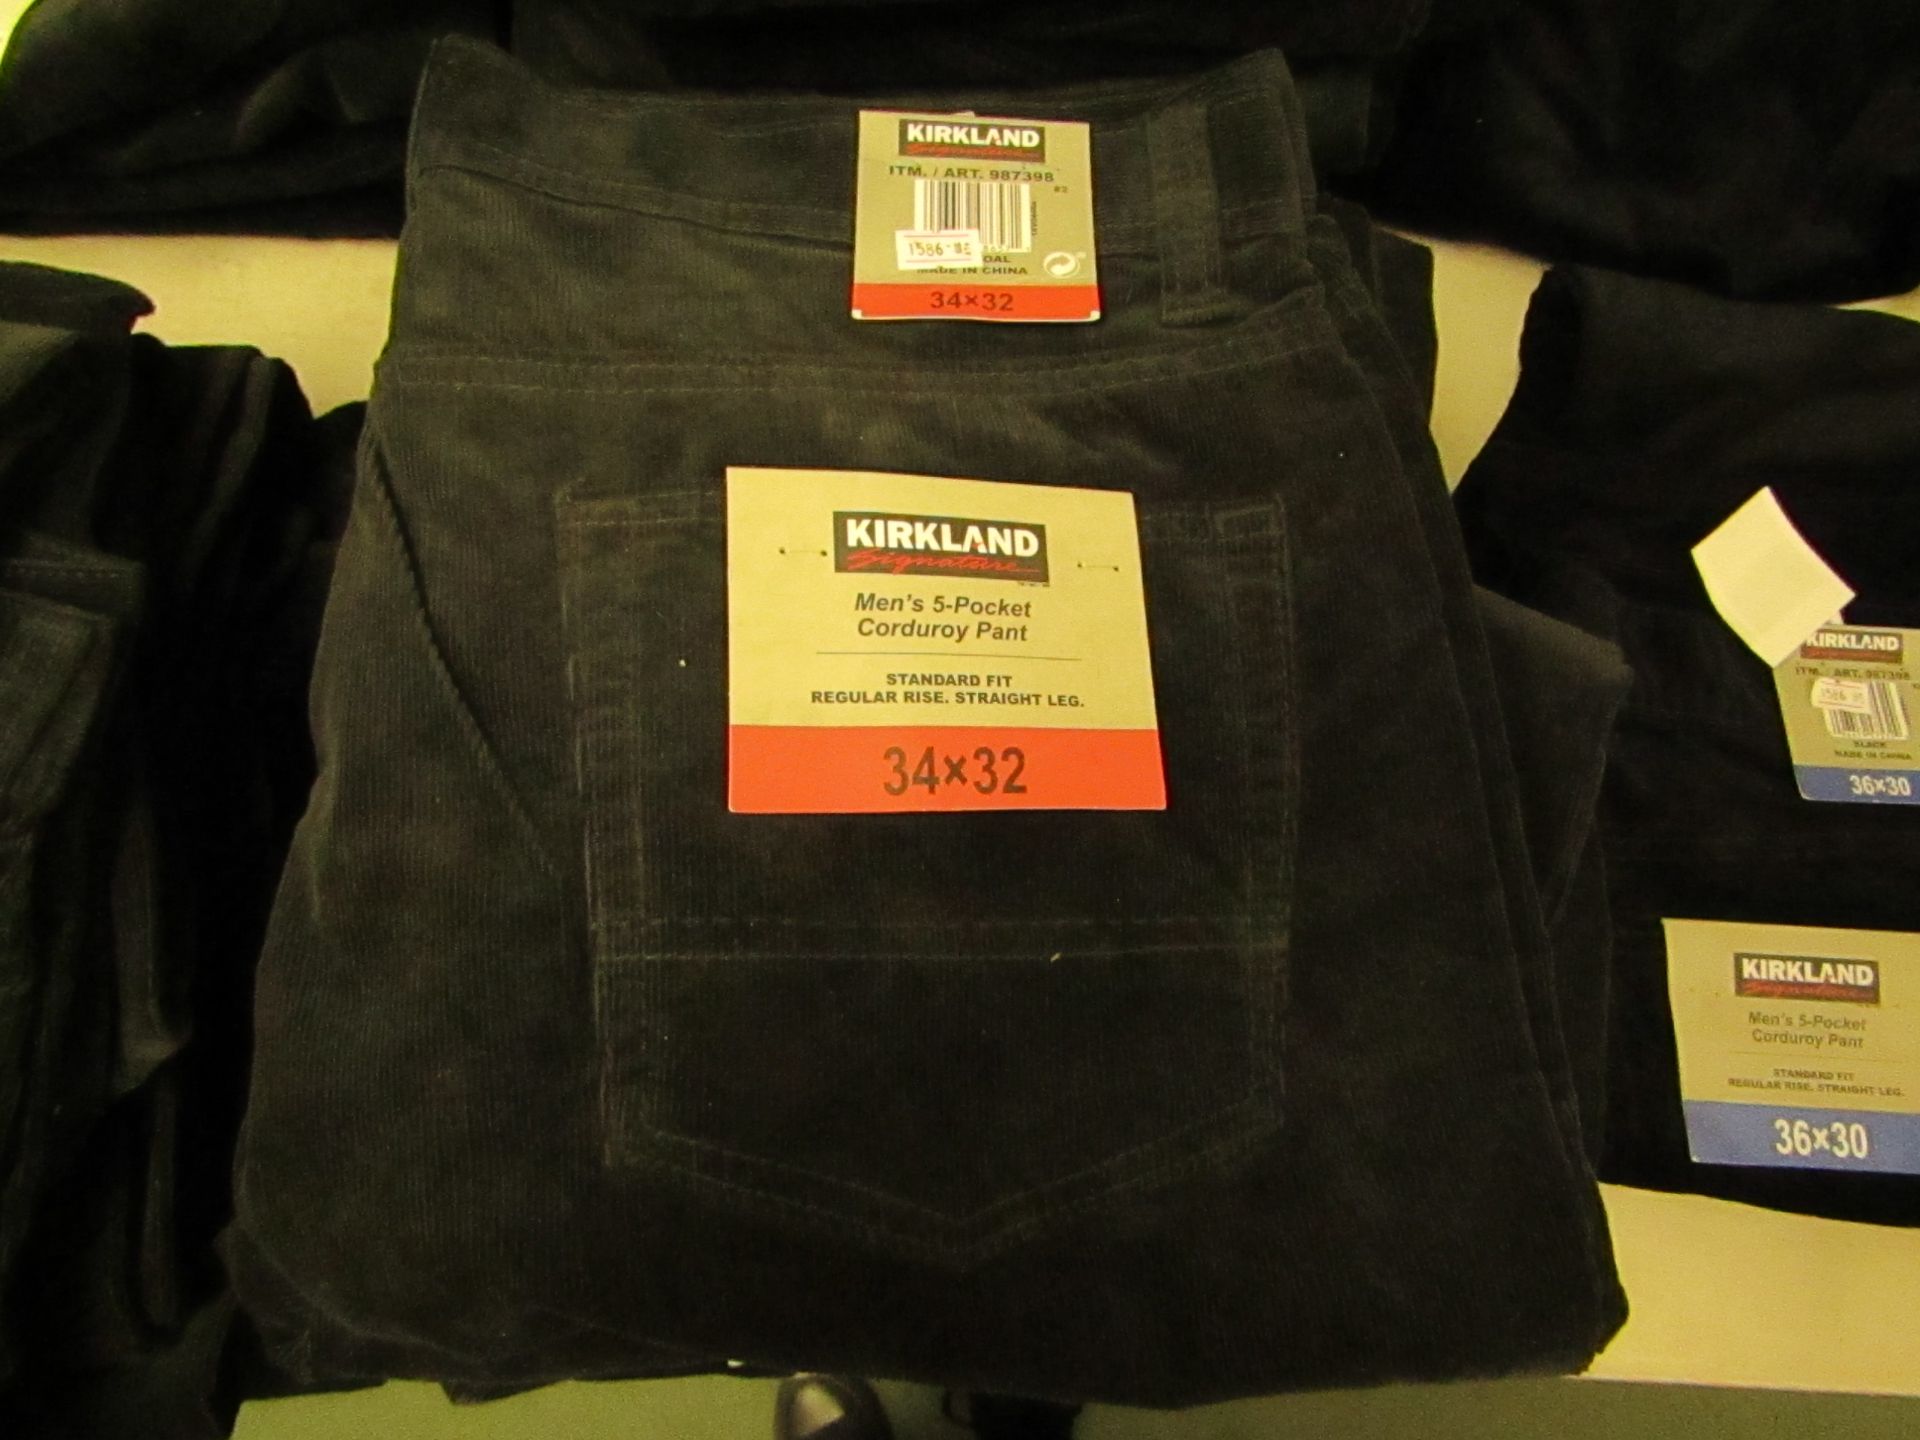 1 x Kirkland Signature Men's  Charcoal 5-pocket Corduroy Pant size 34x32 new with tag